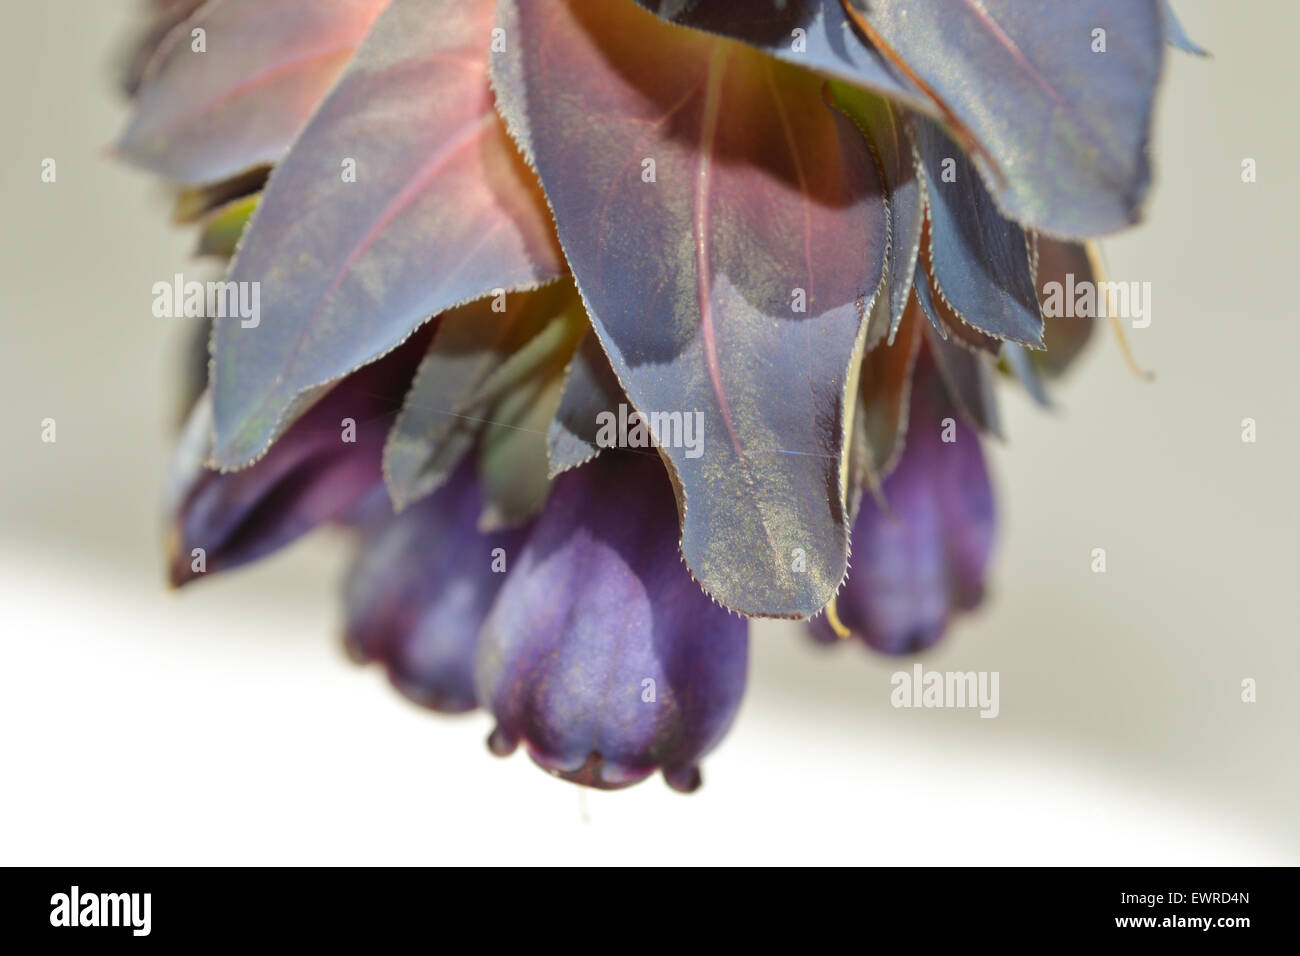 Cerinthe major var. purpurascens (blue honeywort) Stock Photo